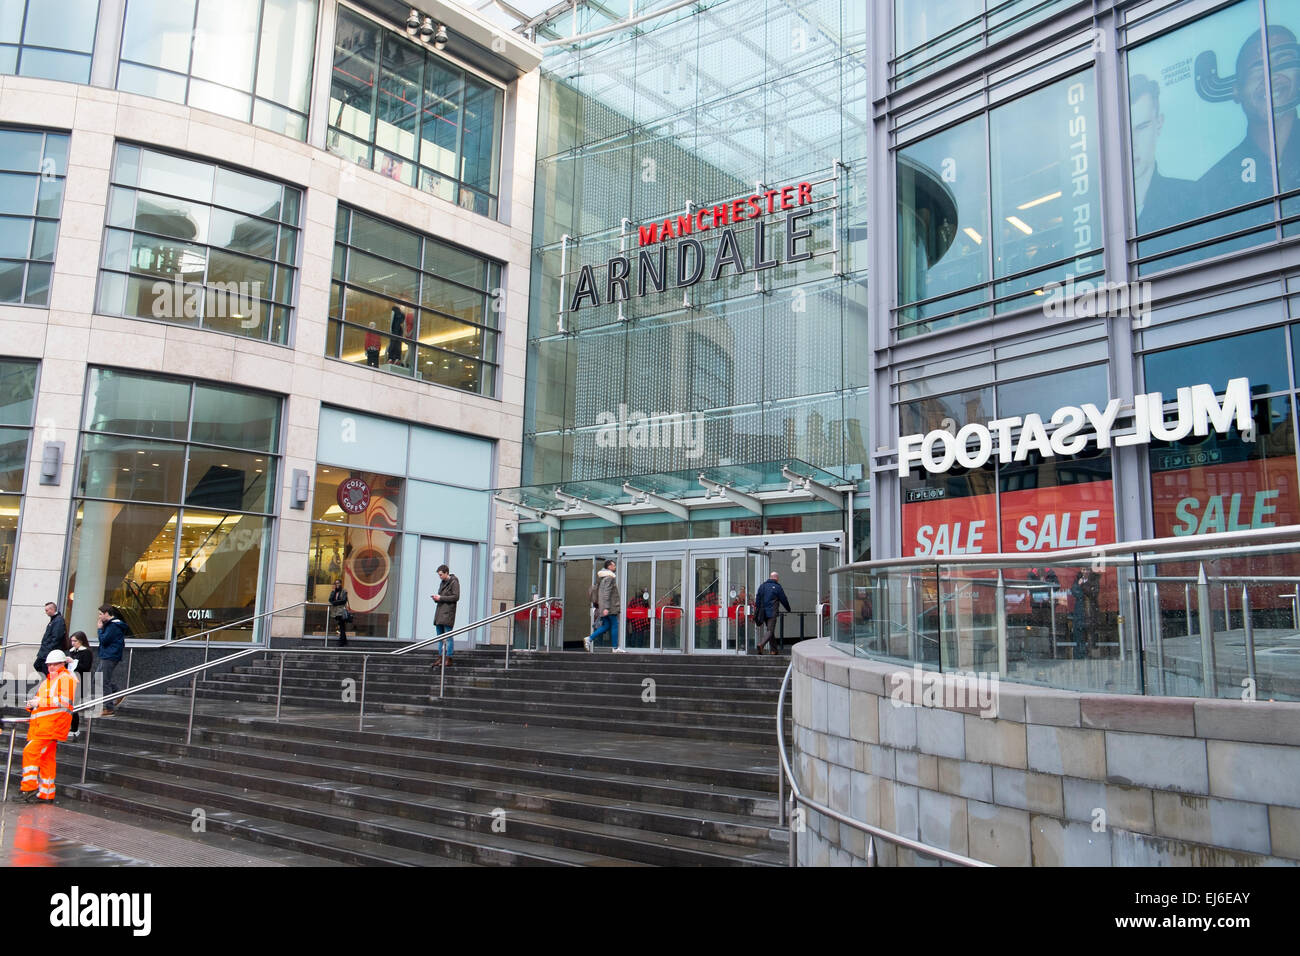 Manchester arndale shopping centre, England Stock Photo